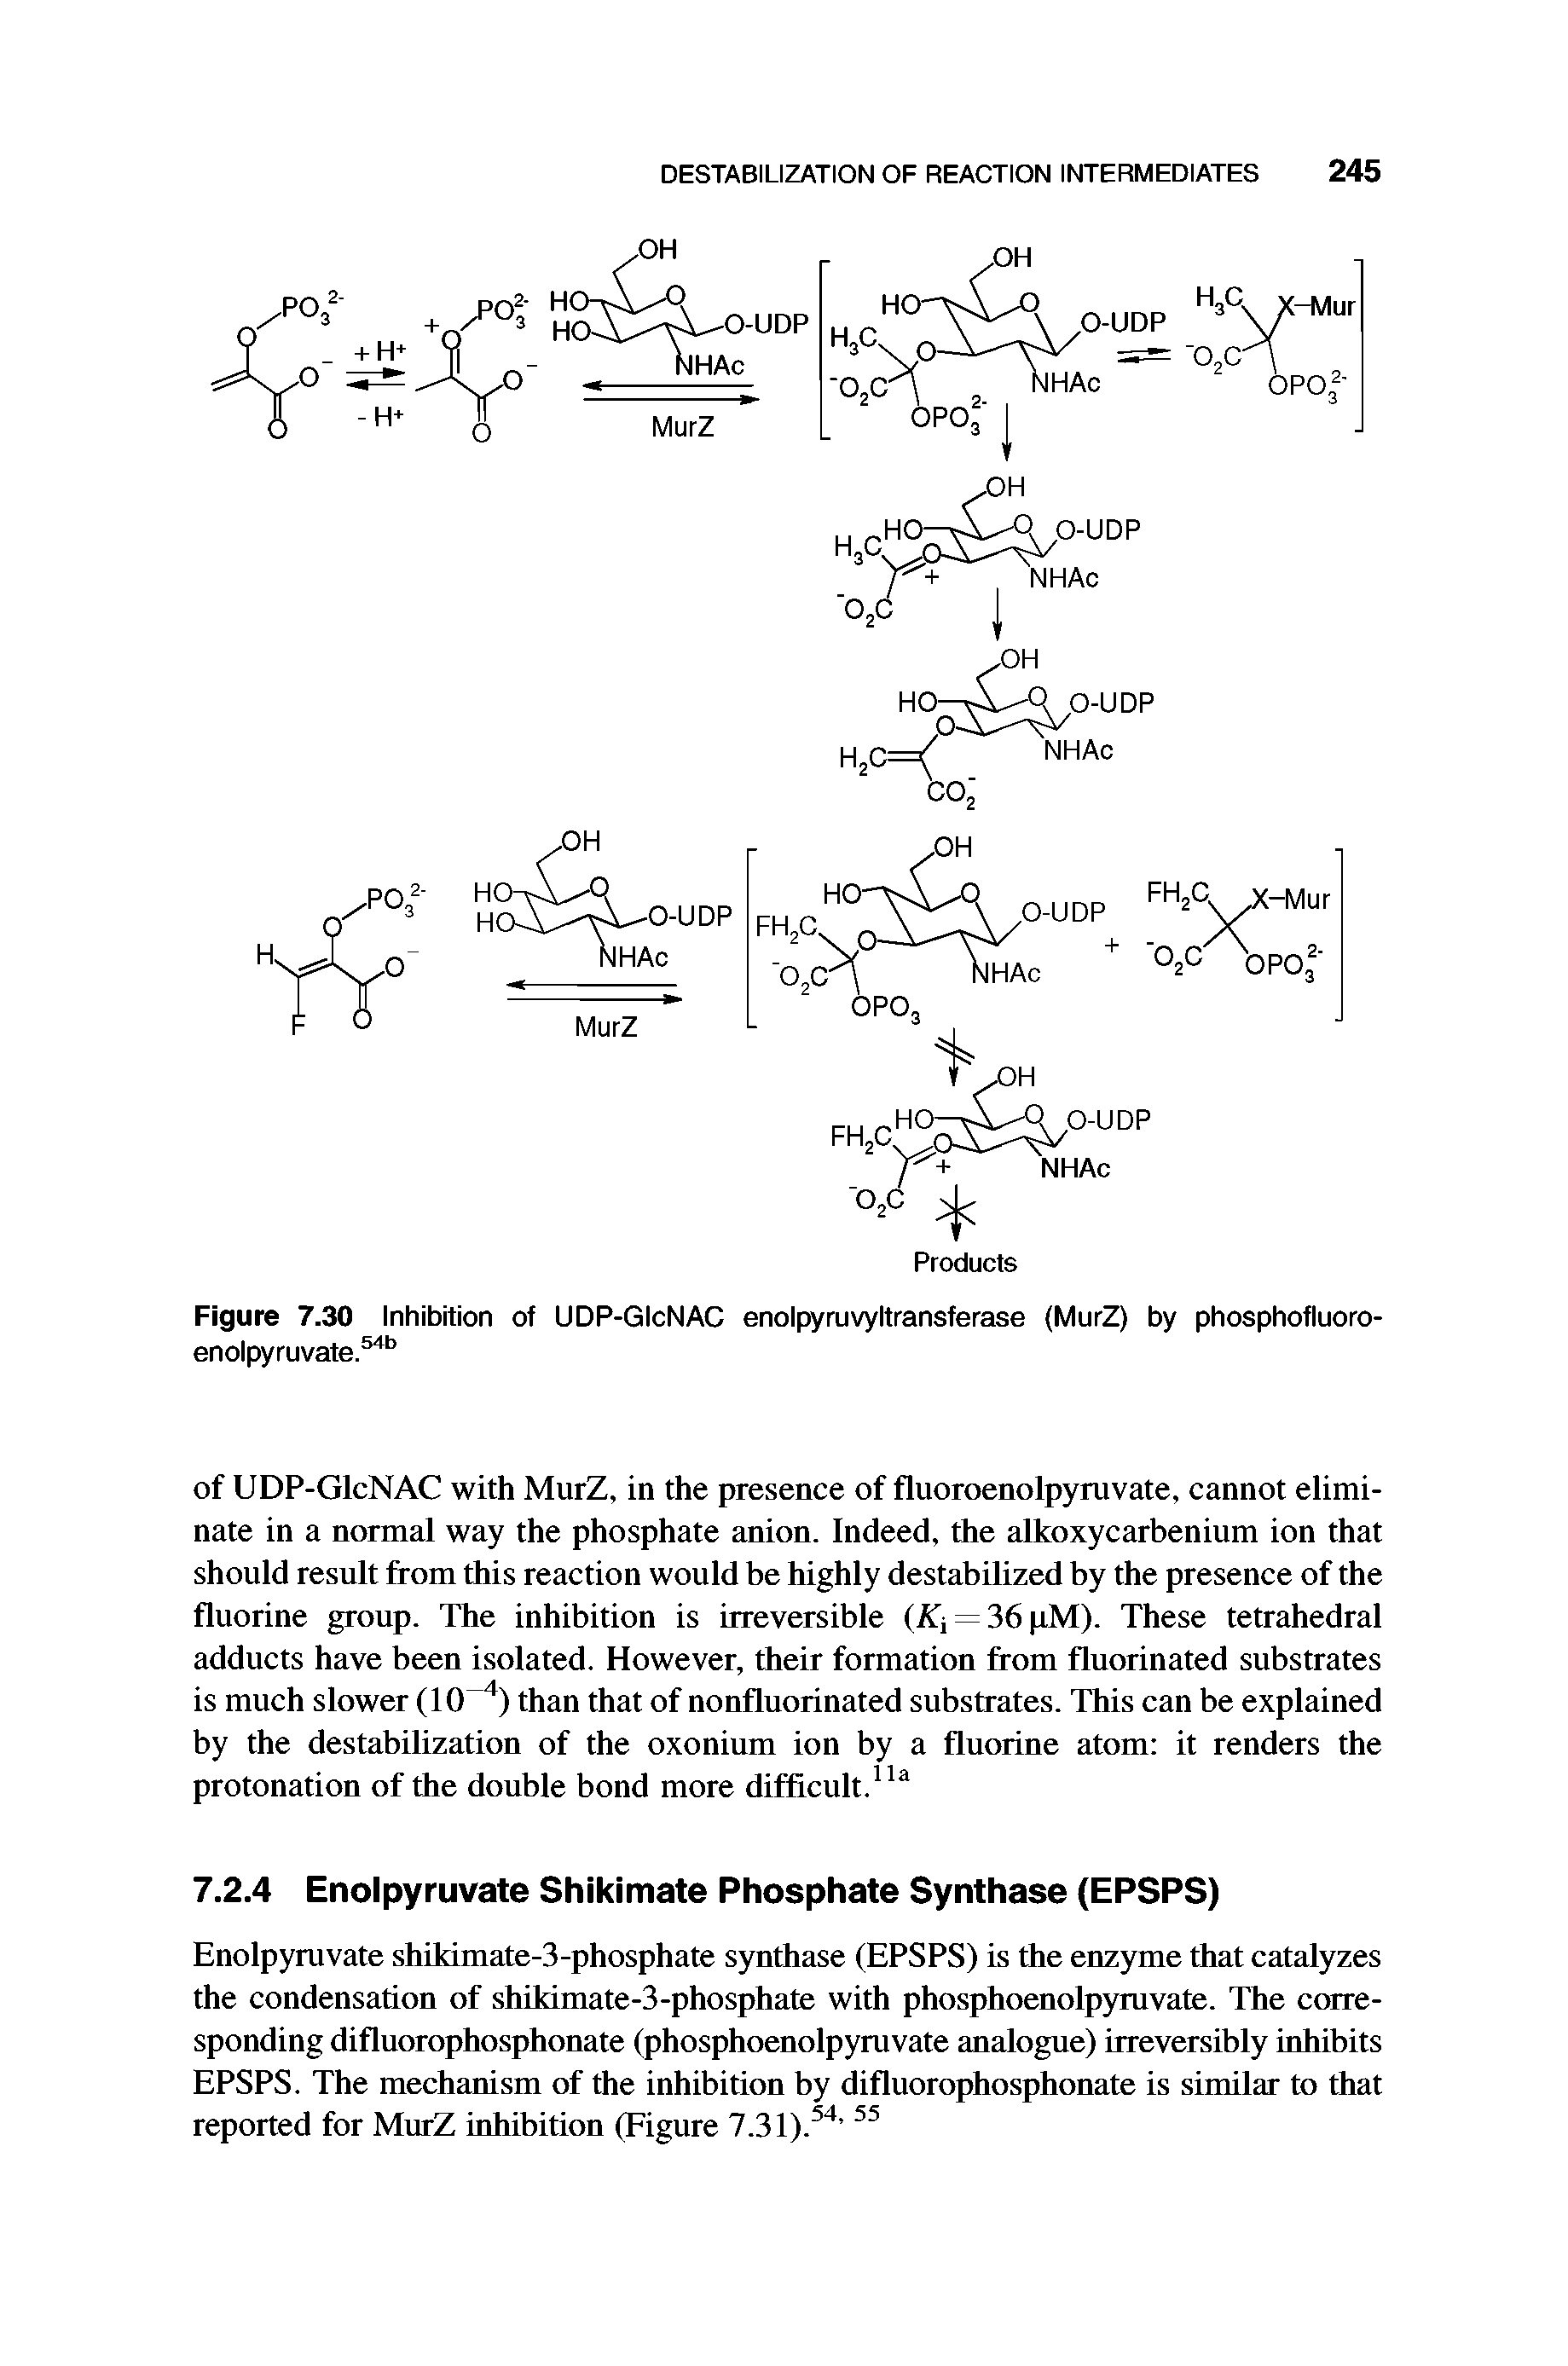 Figure 7.30 Inhibition of UDP-GIcNAC enolpyruvyltransferase (MurZ) by phosphofluoro-enolpyruvate. ...